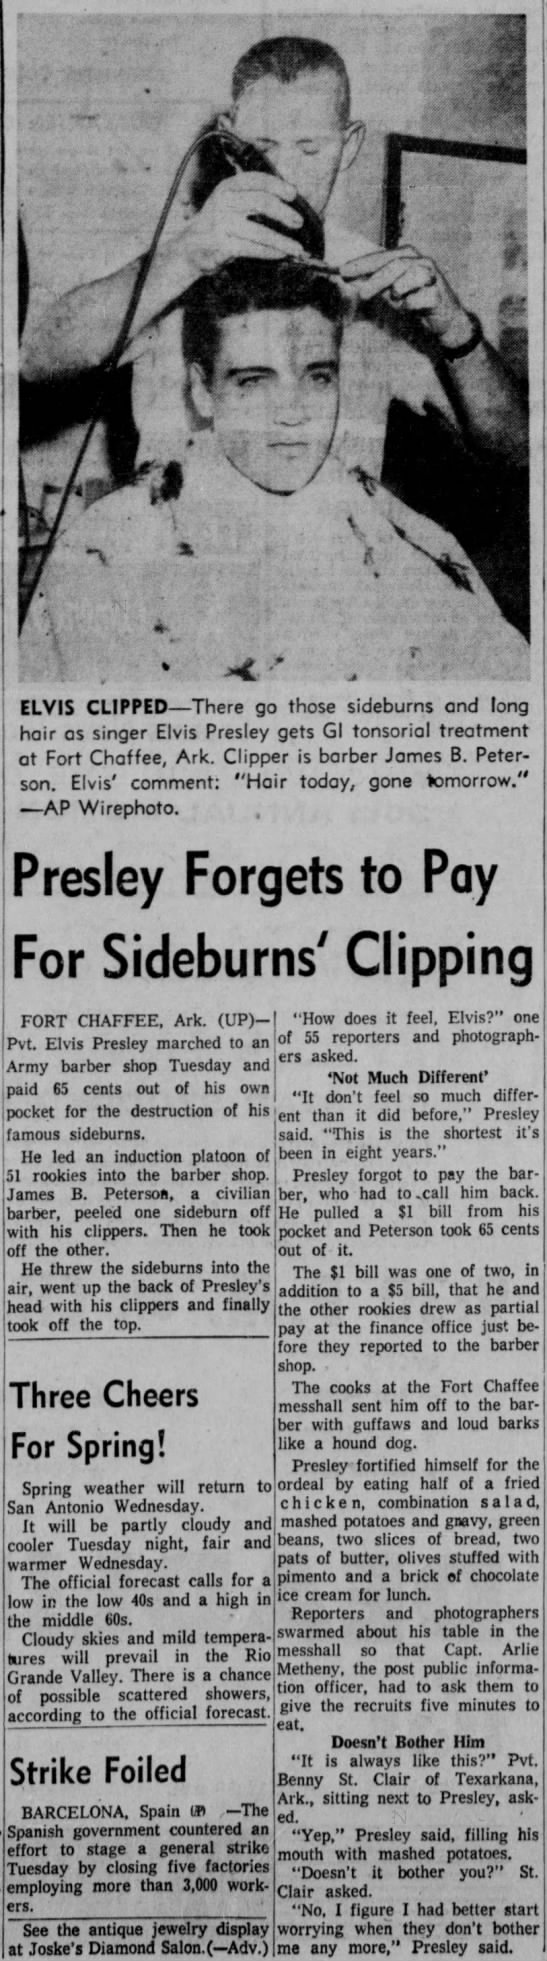 Elvis Presley gets hair cut for army 